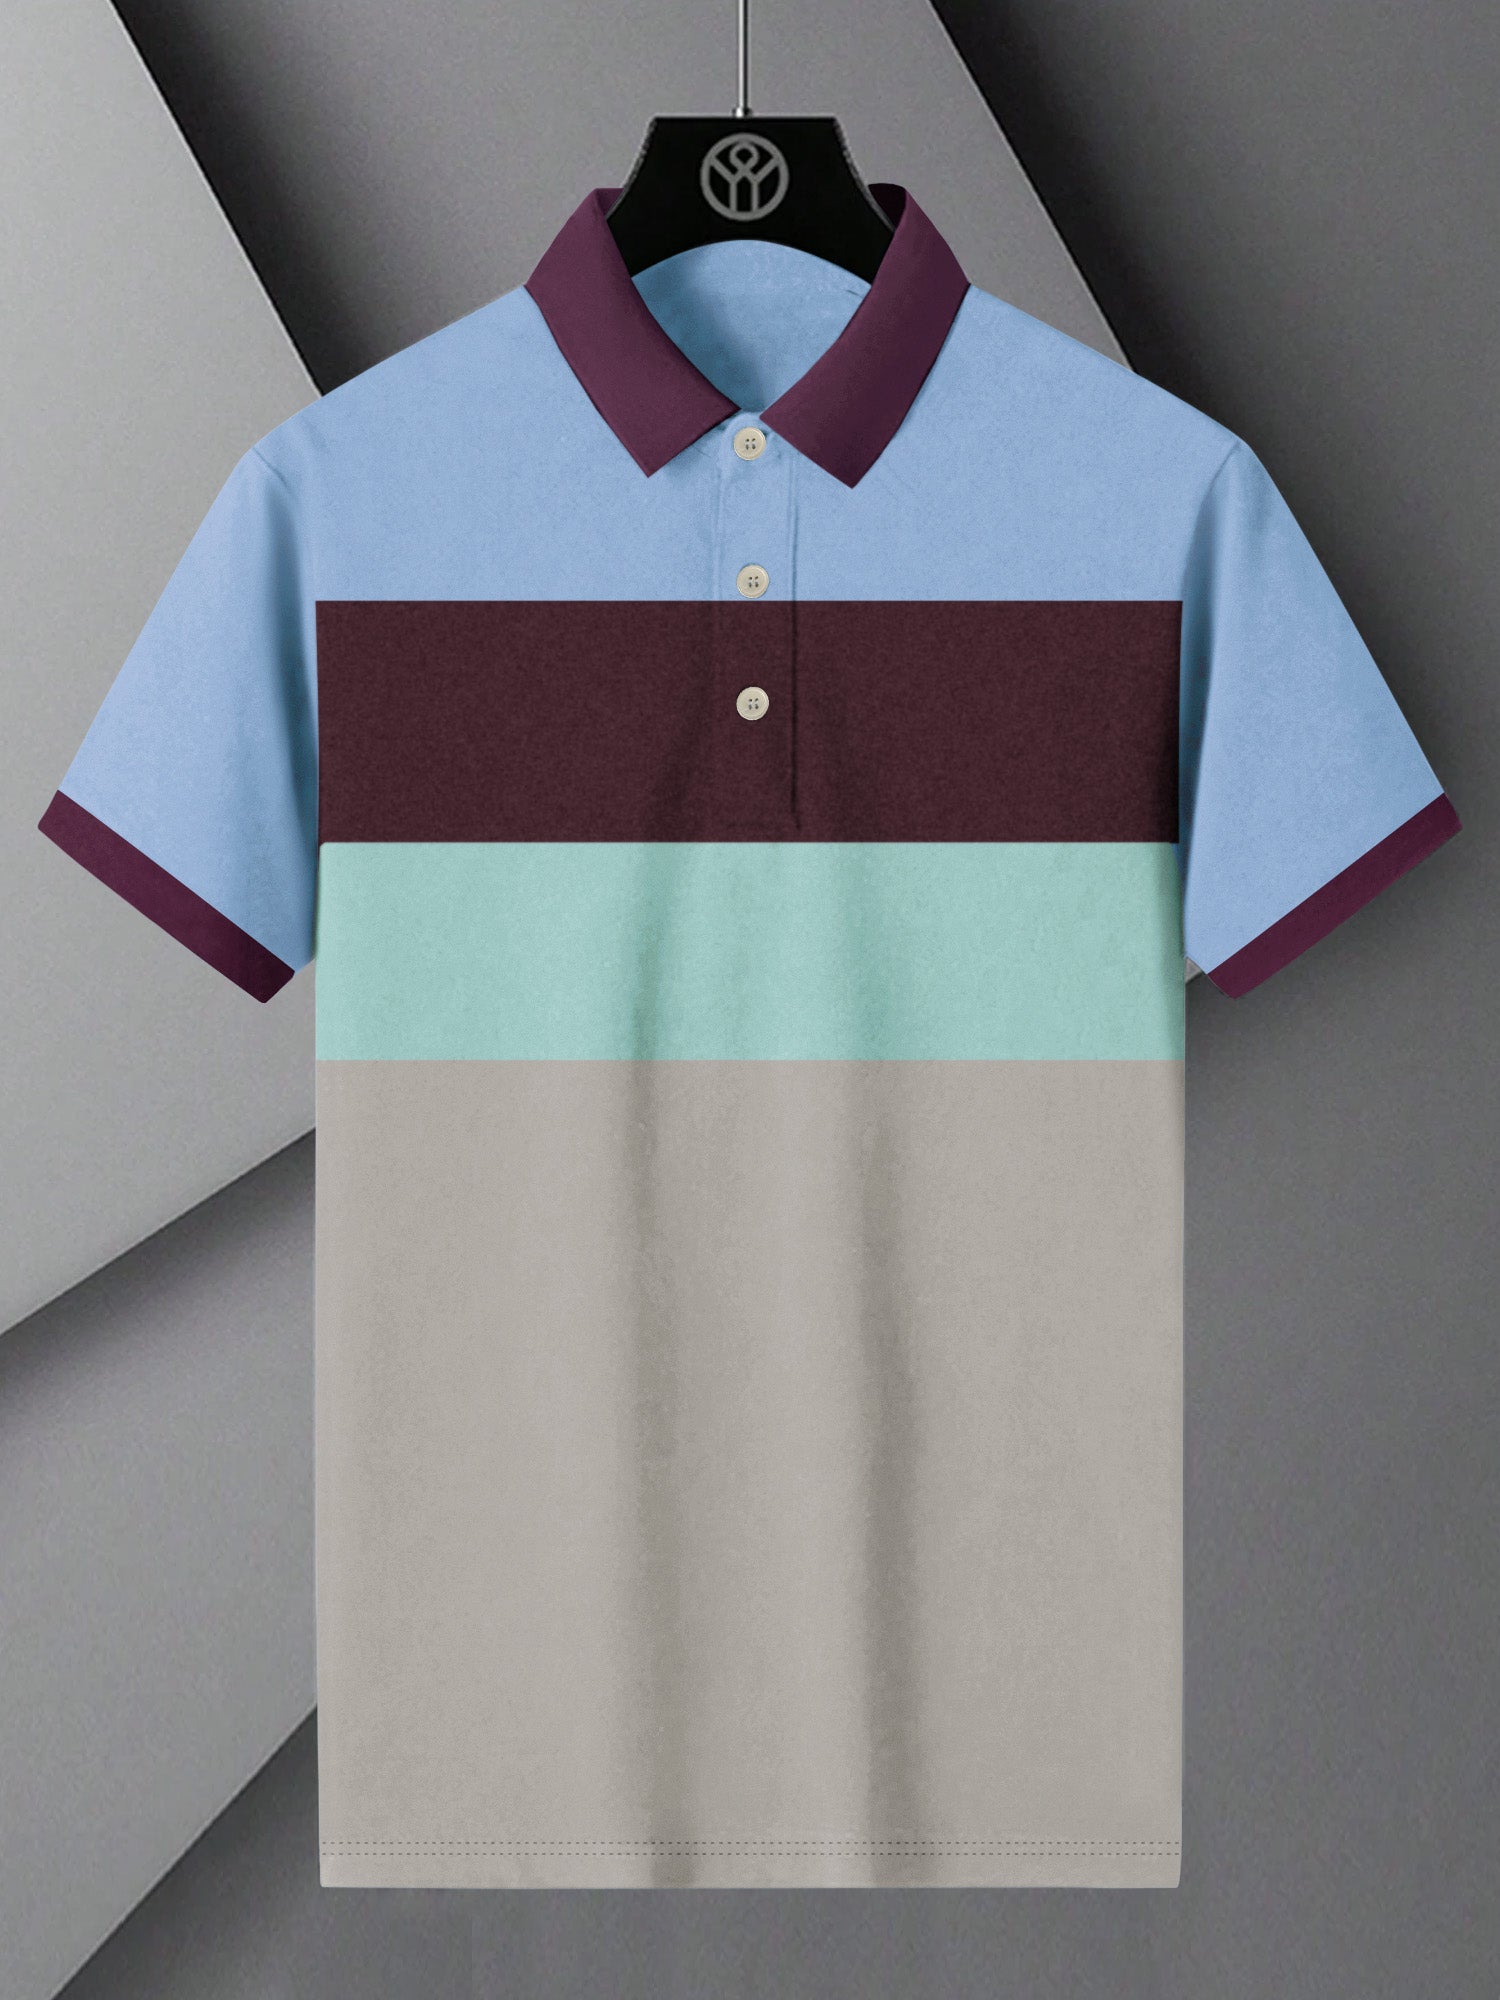 Nautica Men's Short Sleeve Knit Pique Polo Golf Shirt (Large, Persian Red)